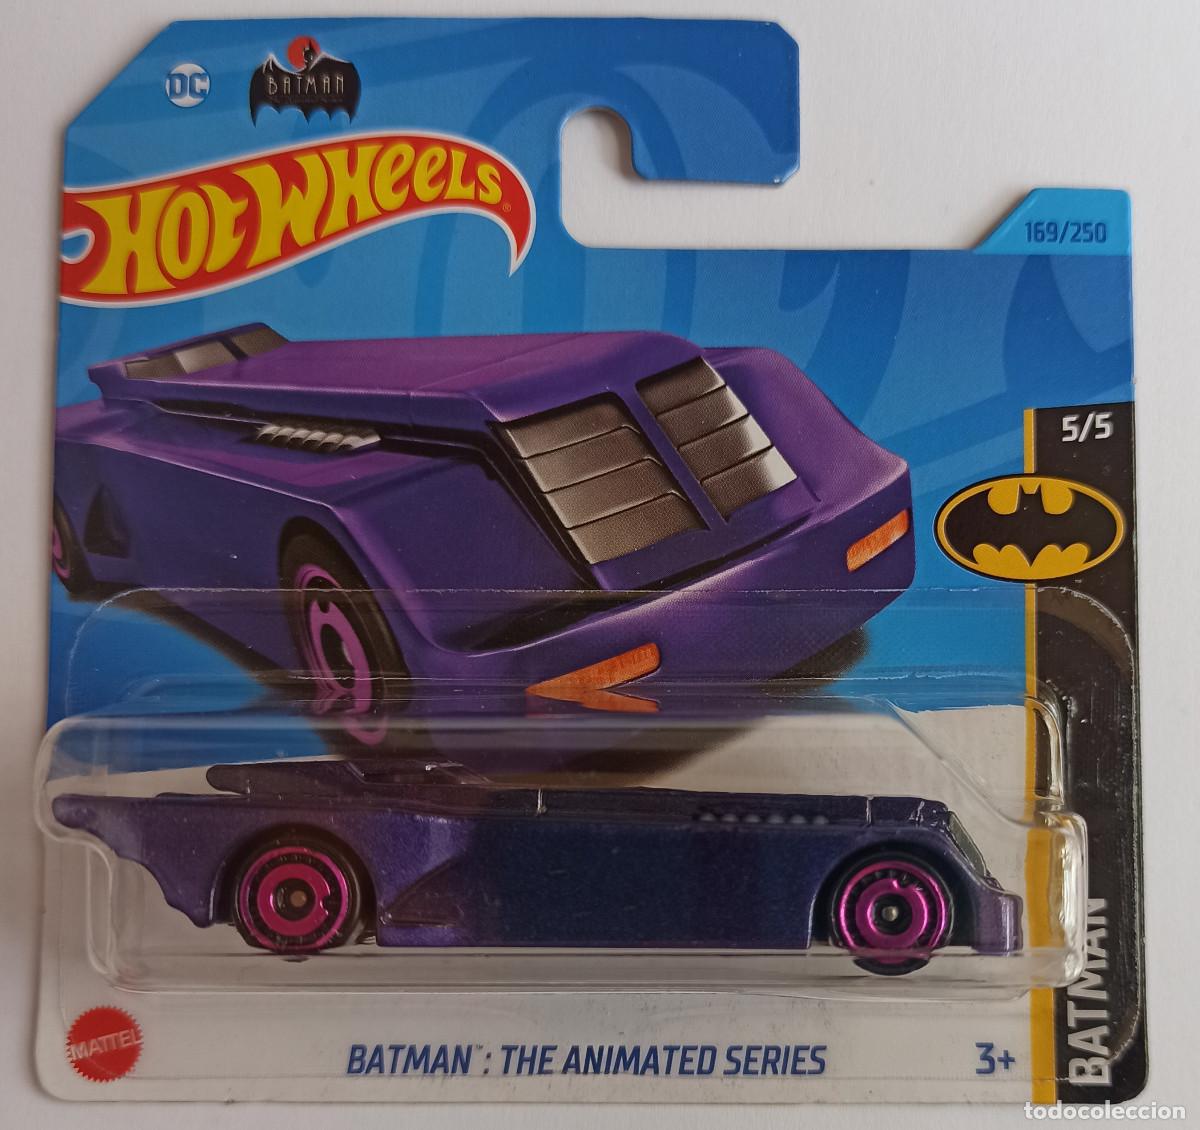 Carrinho Hot Wheels, Temático, Batman: The Animated Series, Batman 3/5